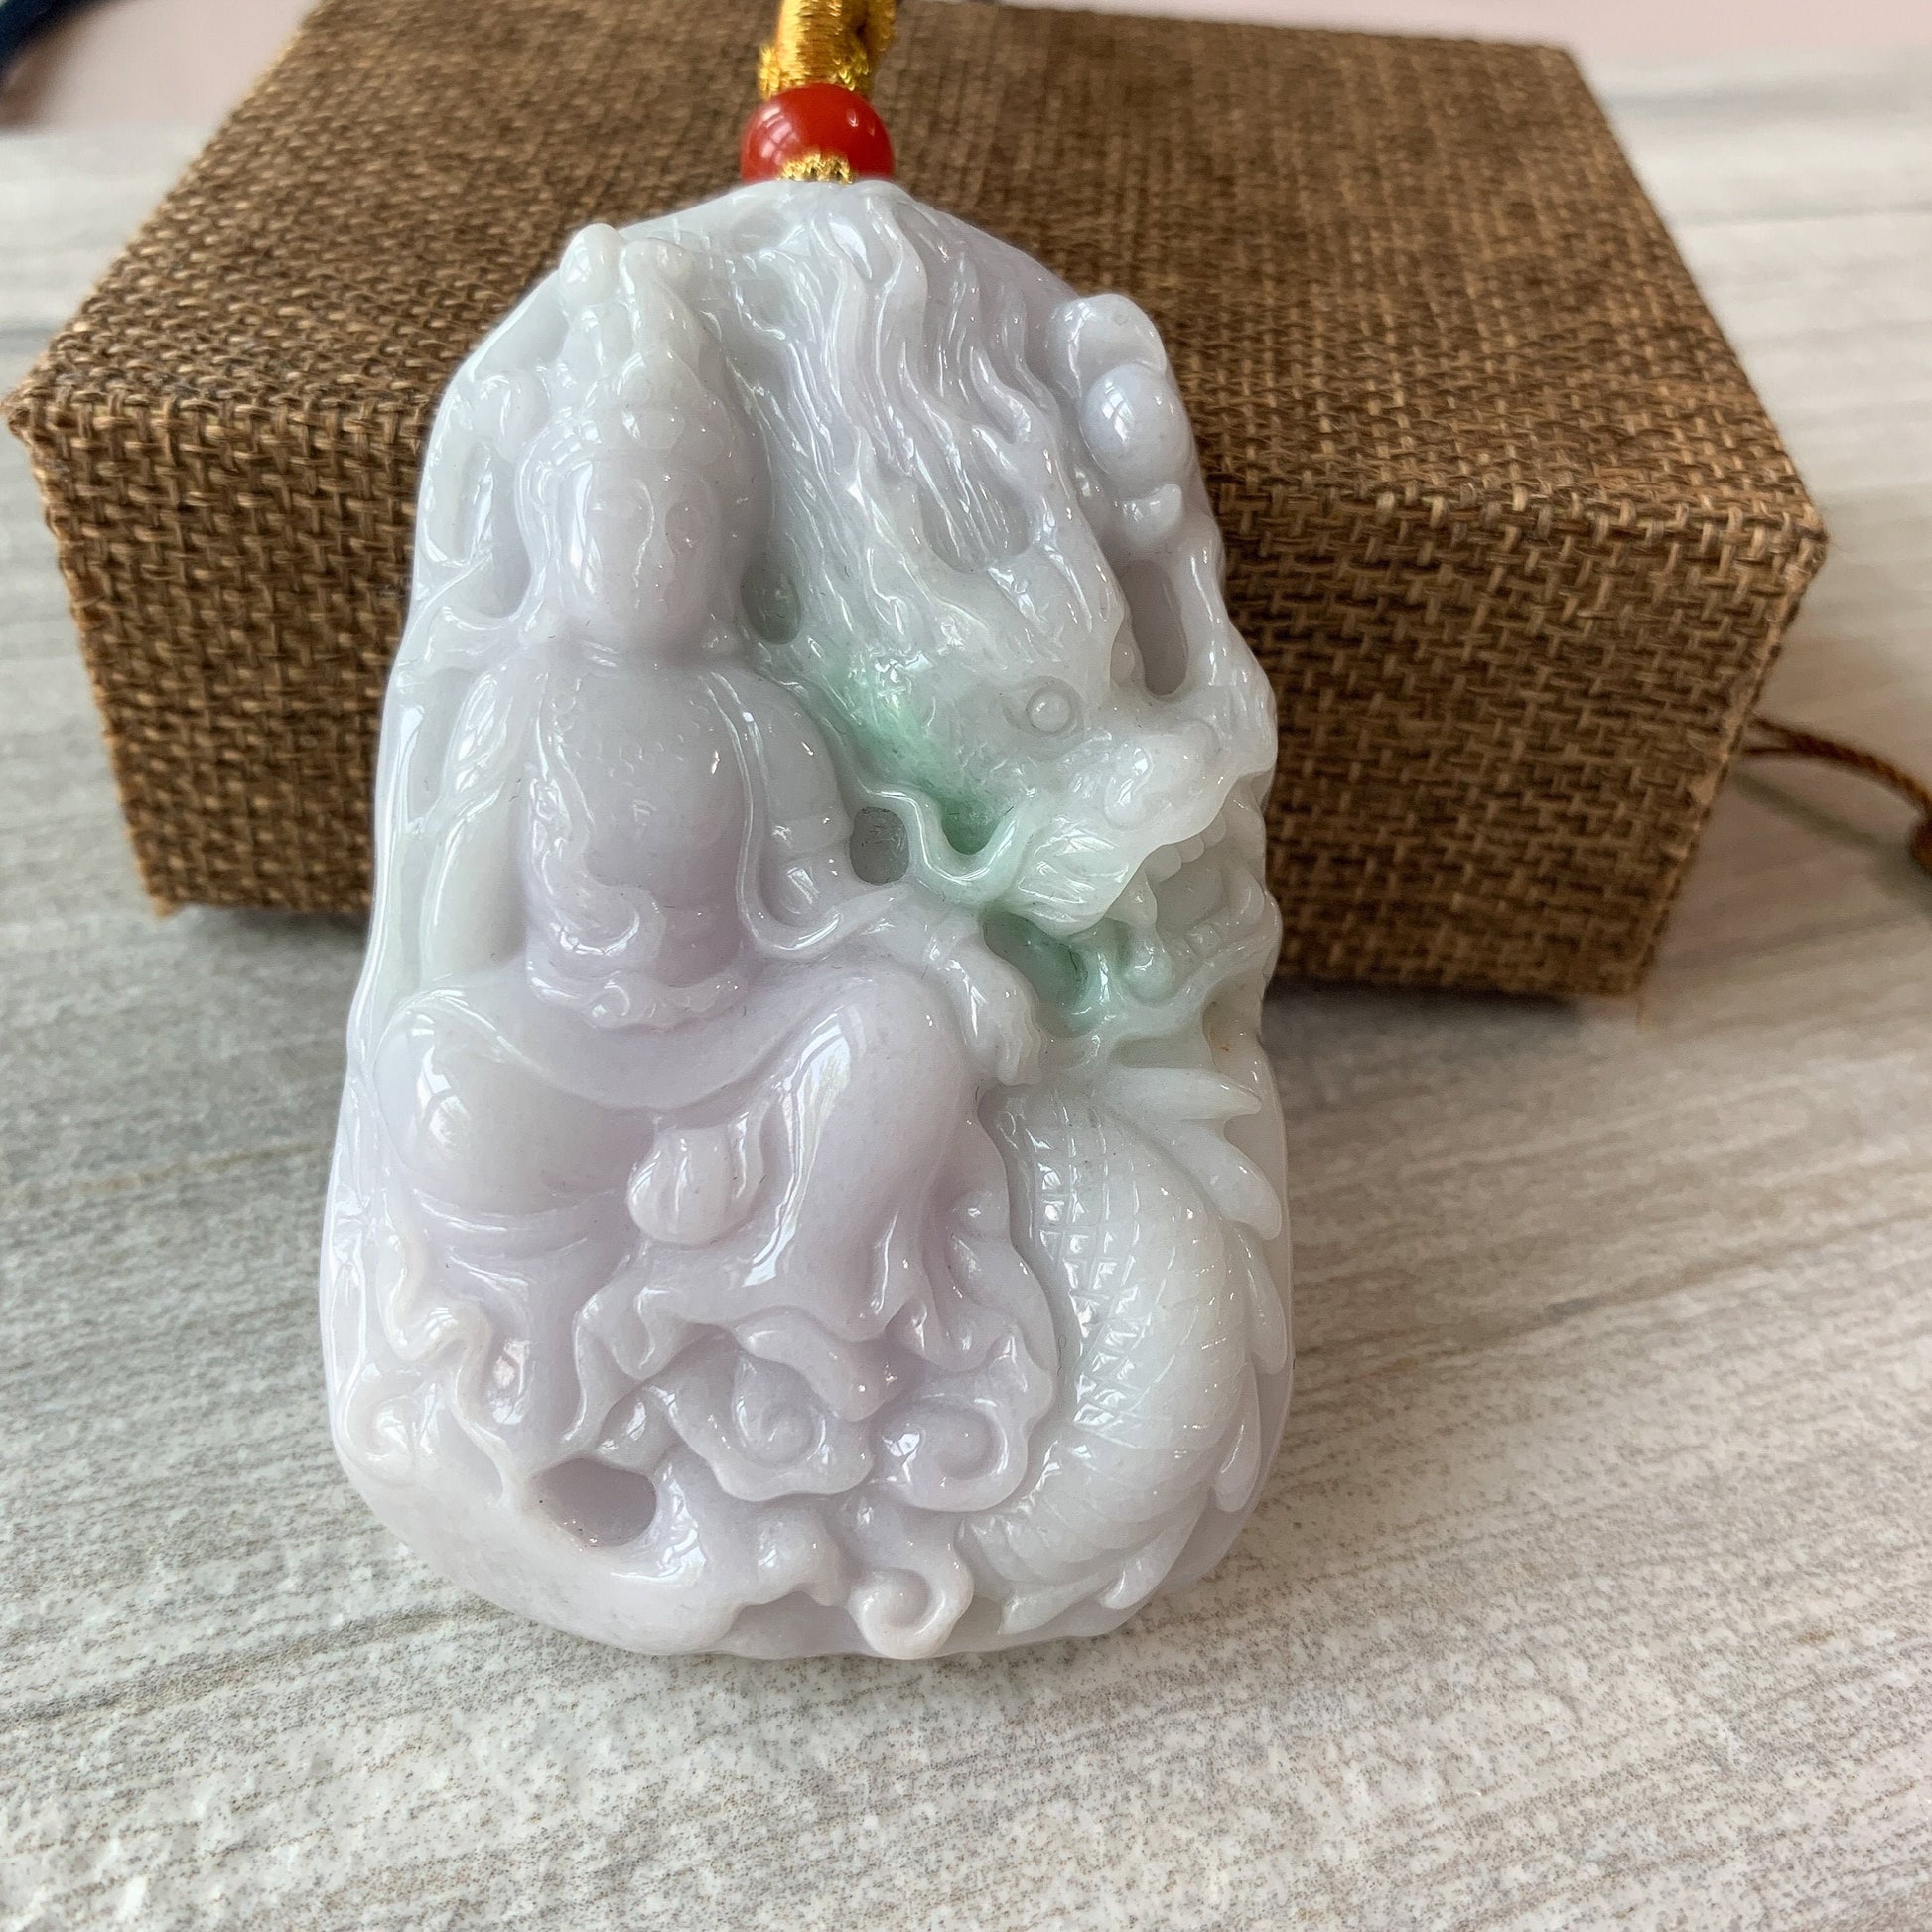 Jadeite Jade Guan Yin Kwan Yin Protected by Dragon Avalokitesvara Semi-Translucent Carved Pendant Necklace, YJ-0321-0351428 - AriaDesignCollection